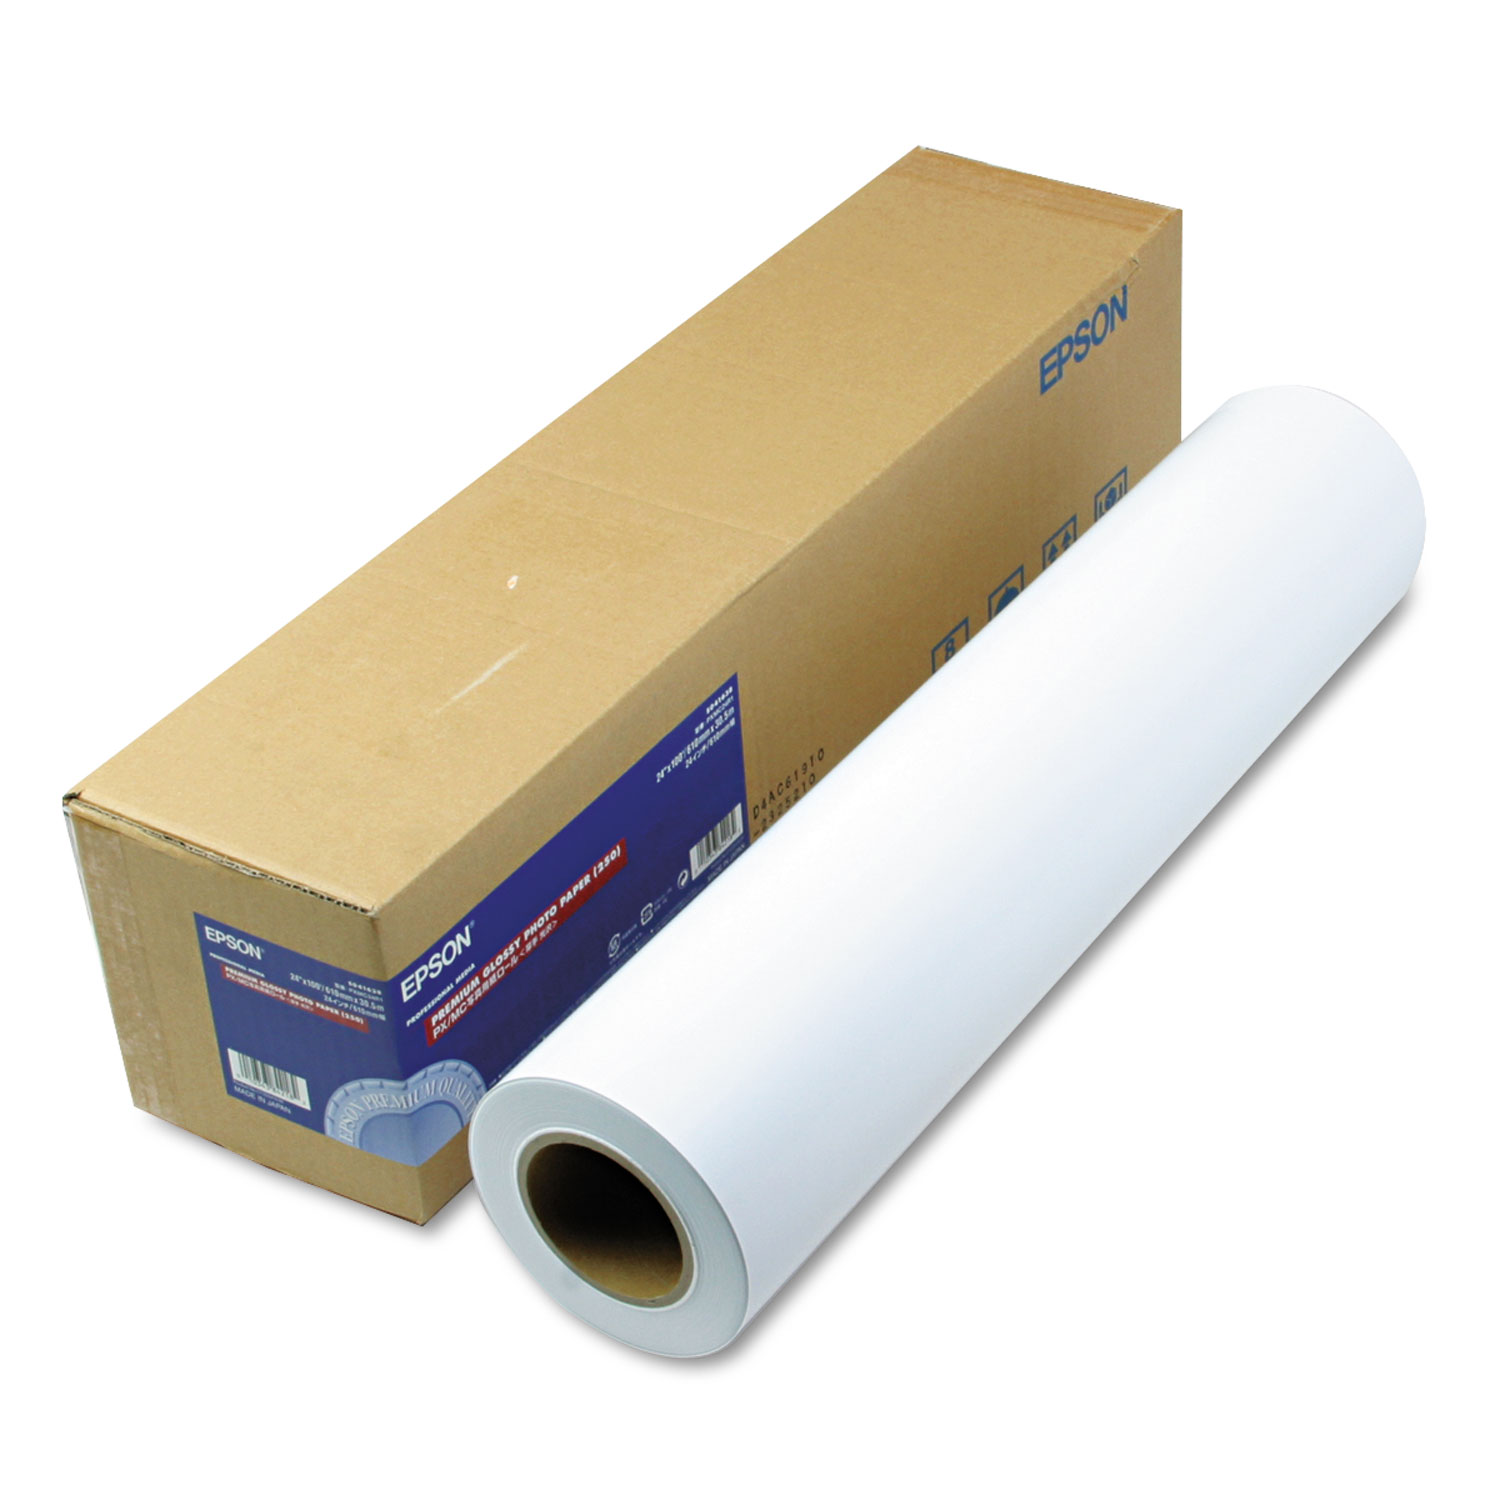 Premium Glossy Photo Paper Rolls, 270 g, 24 x 100 ft, Roll